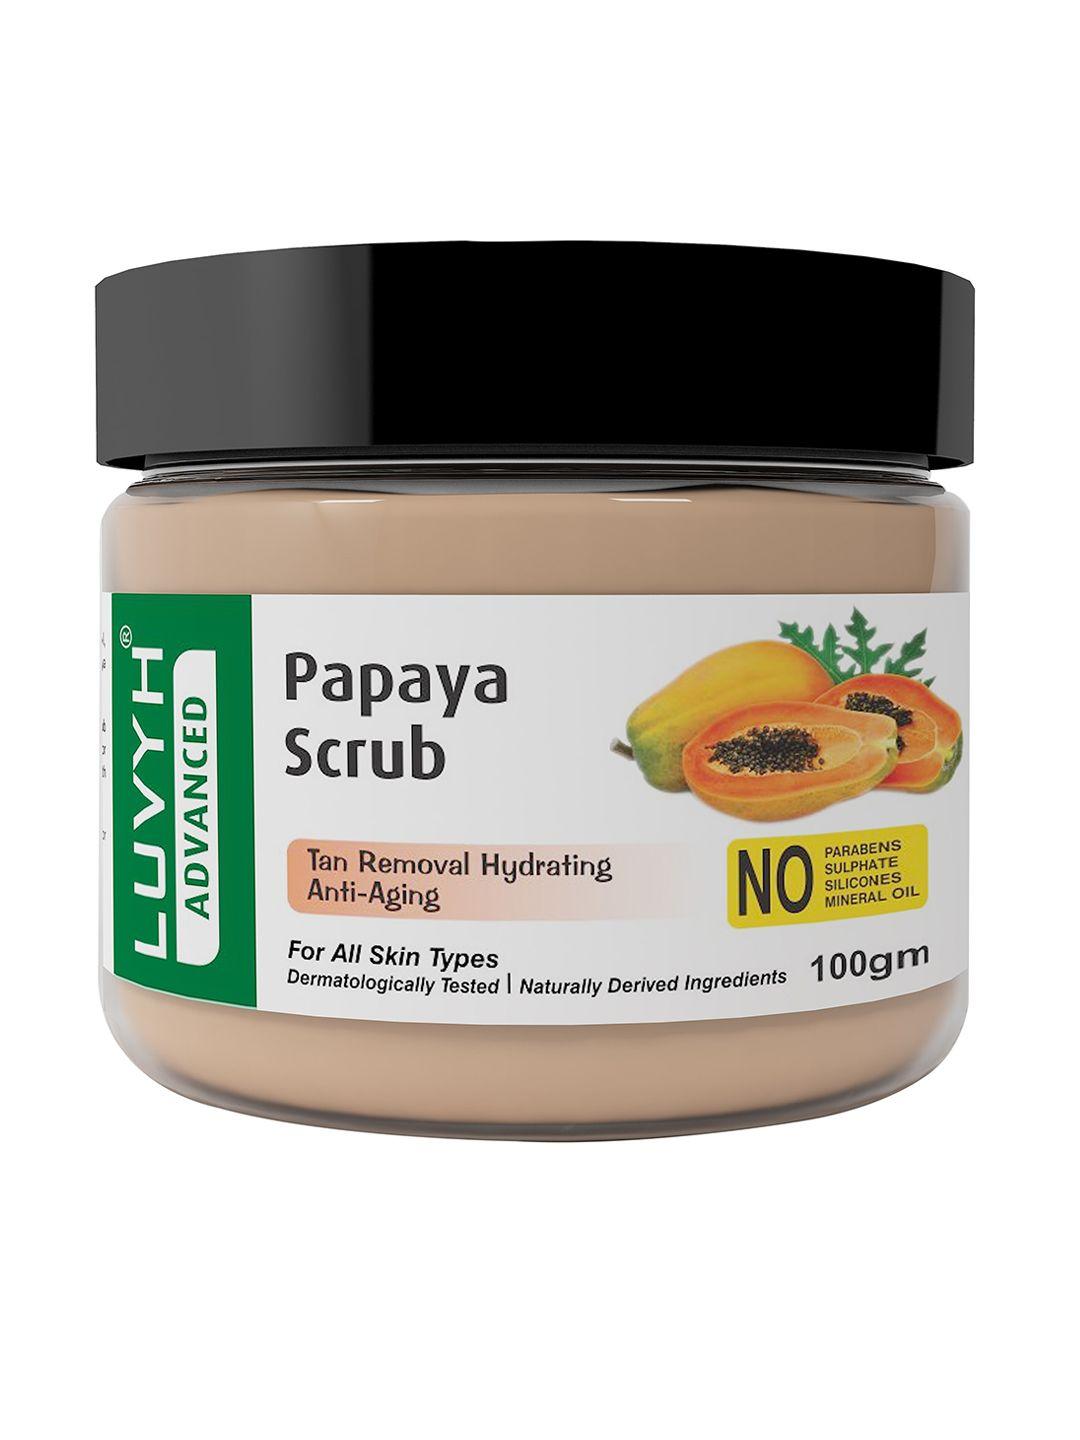 luvyh advanced papaya scrub for tan removal - 100g